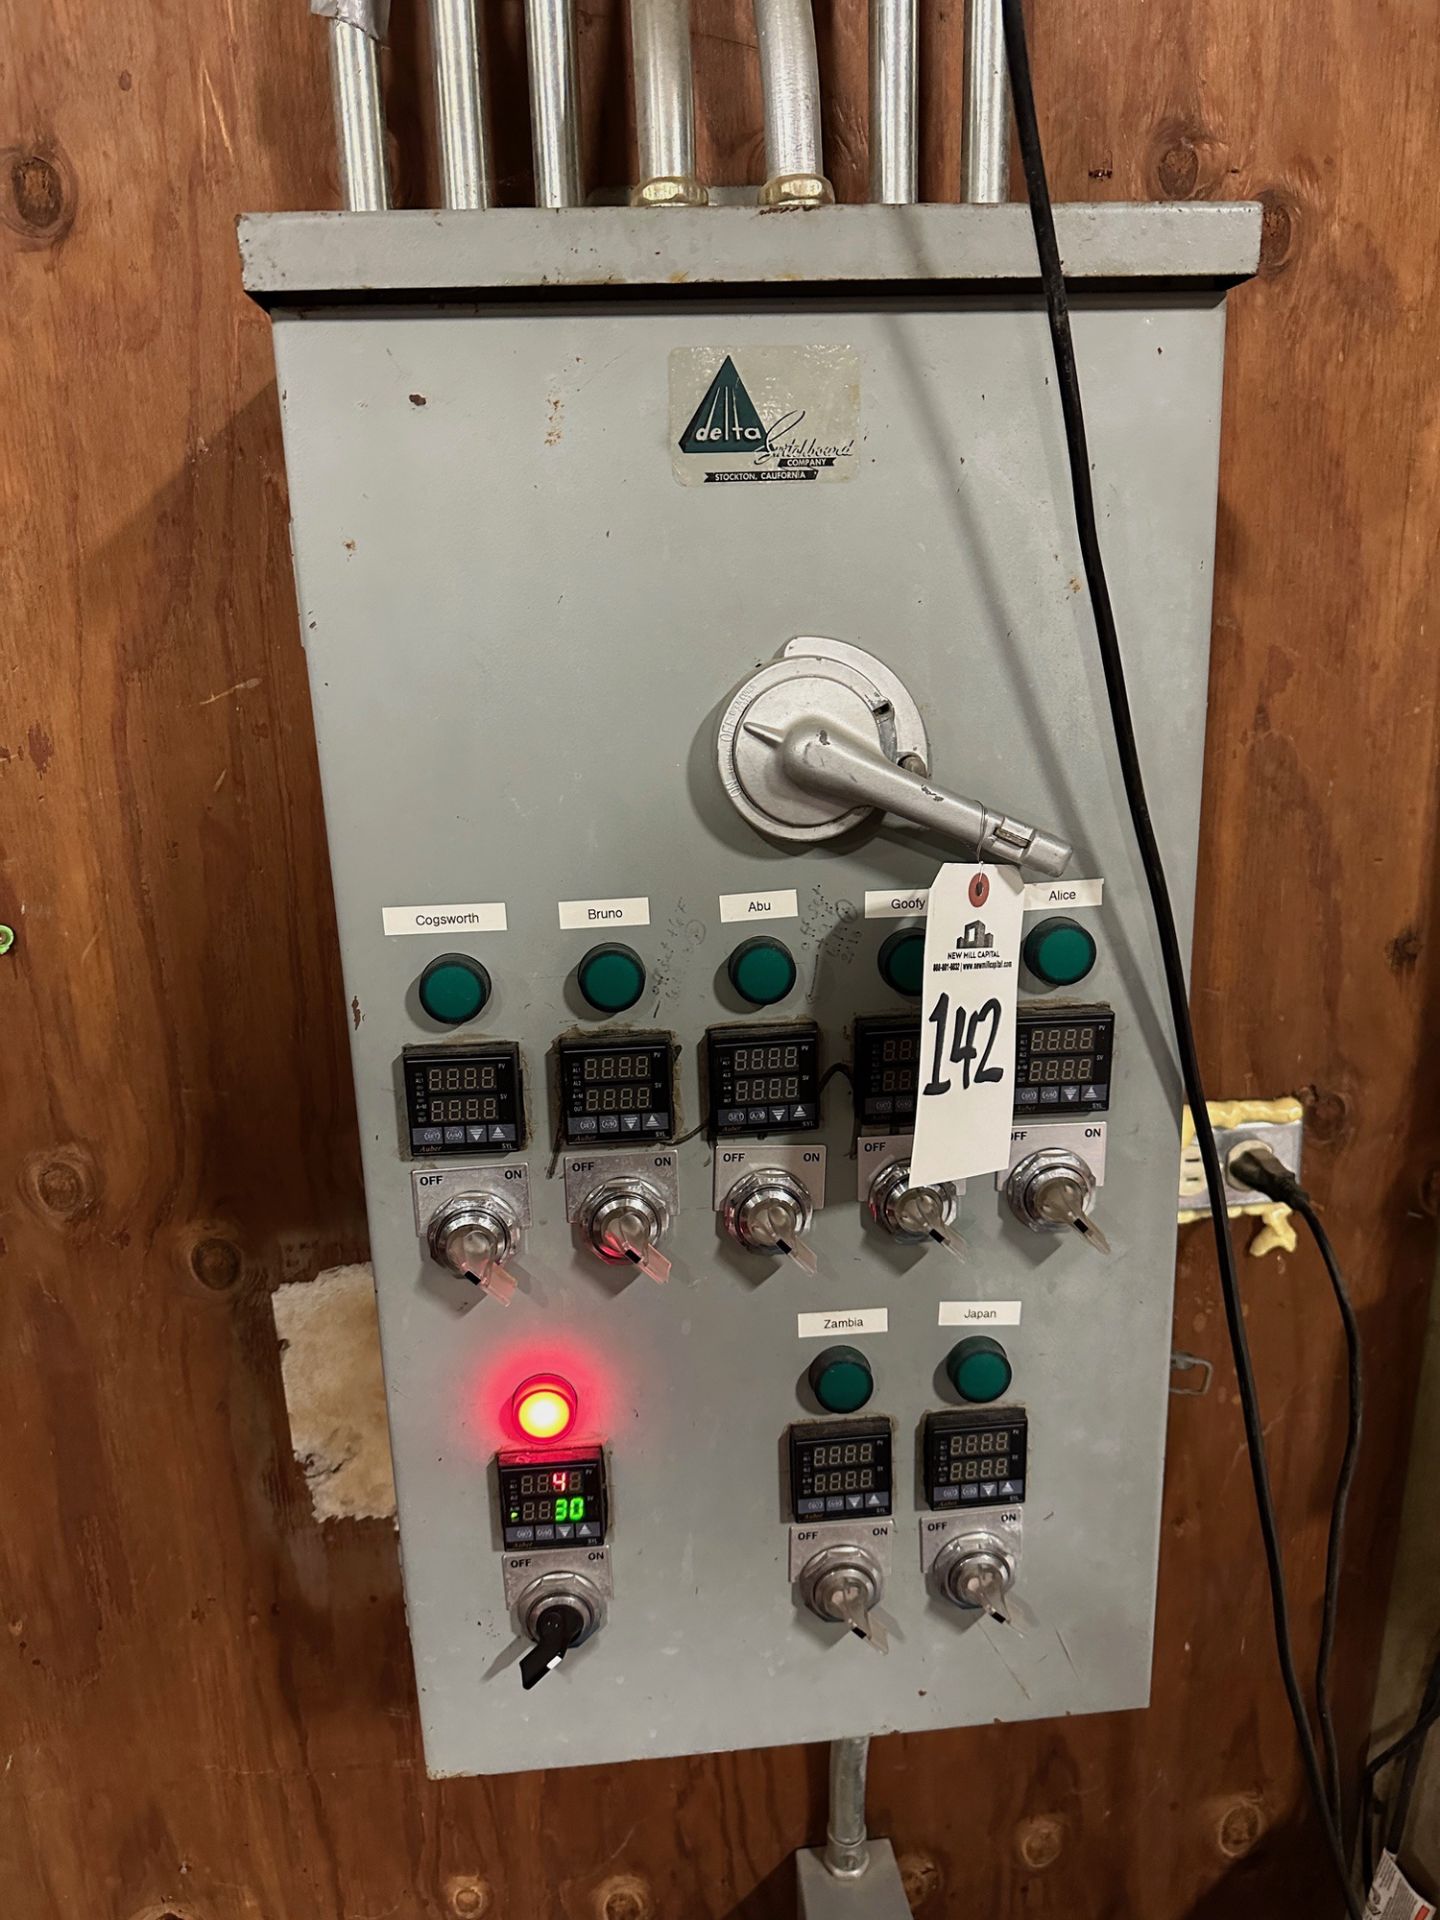 Delta Switchboard Cellar Control Panel | Rig Fee $125